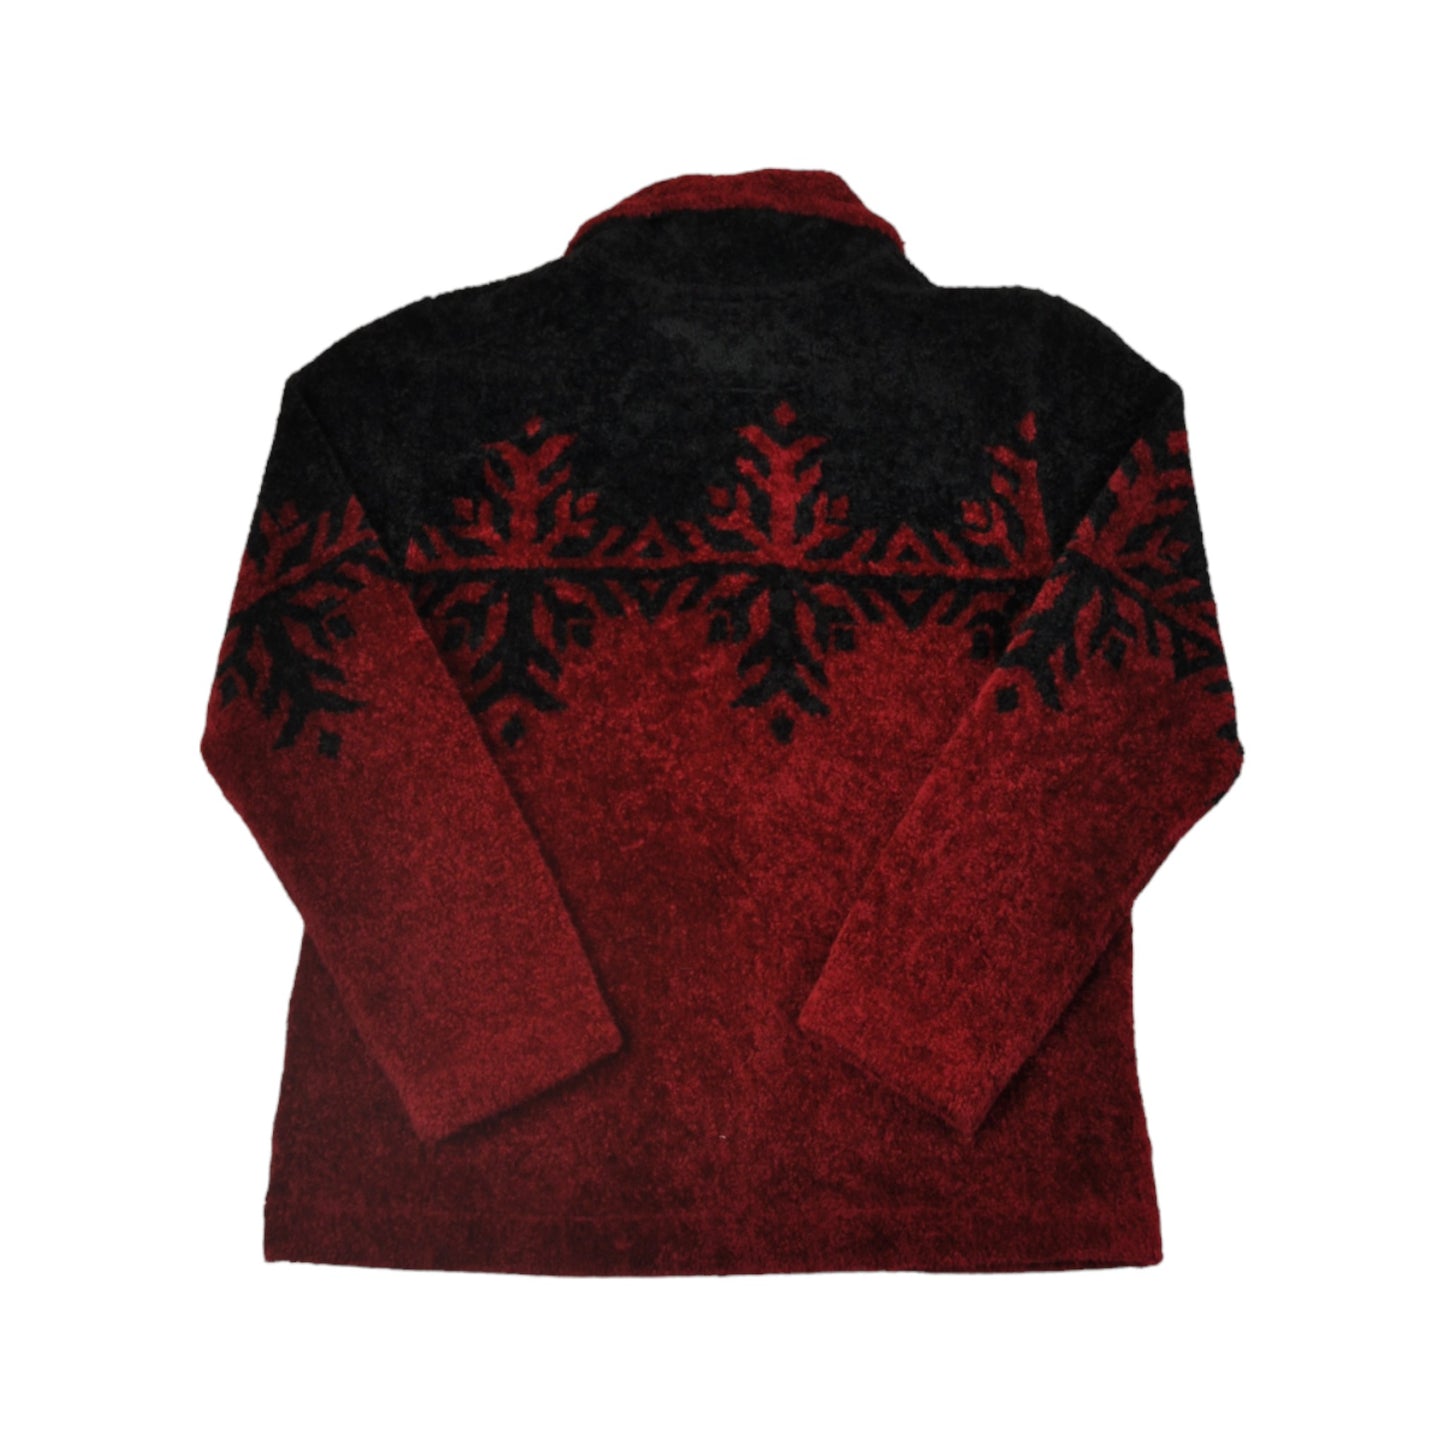 Vintage Fleece Jacket Retro Pattern Red/Black Ladies Small